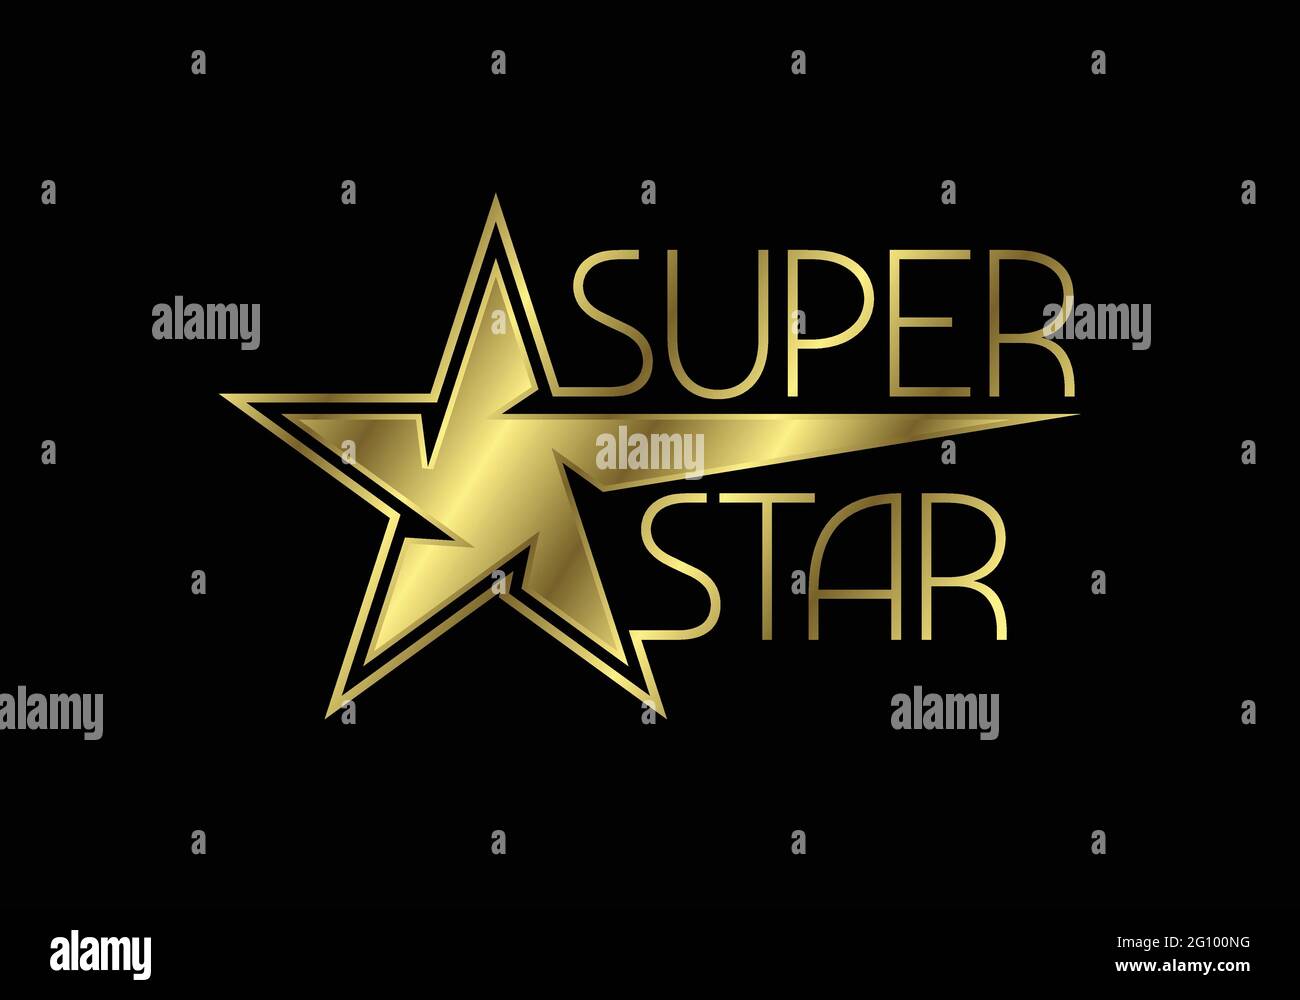 Symbol Für Das Goldene Super Star-Logo. Stock Vektor